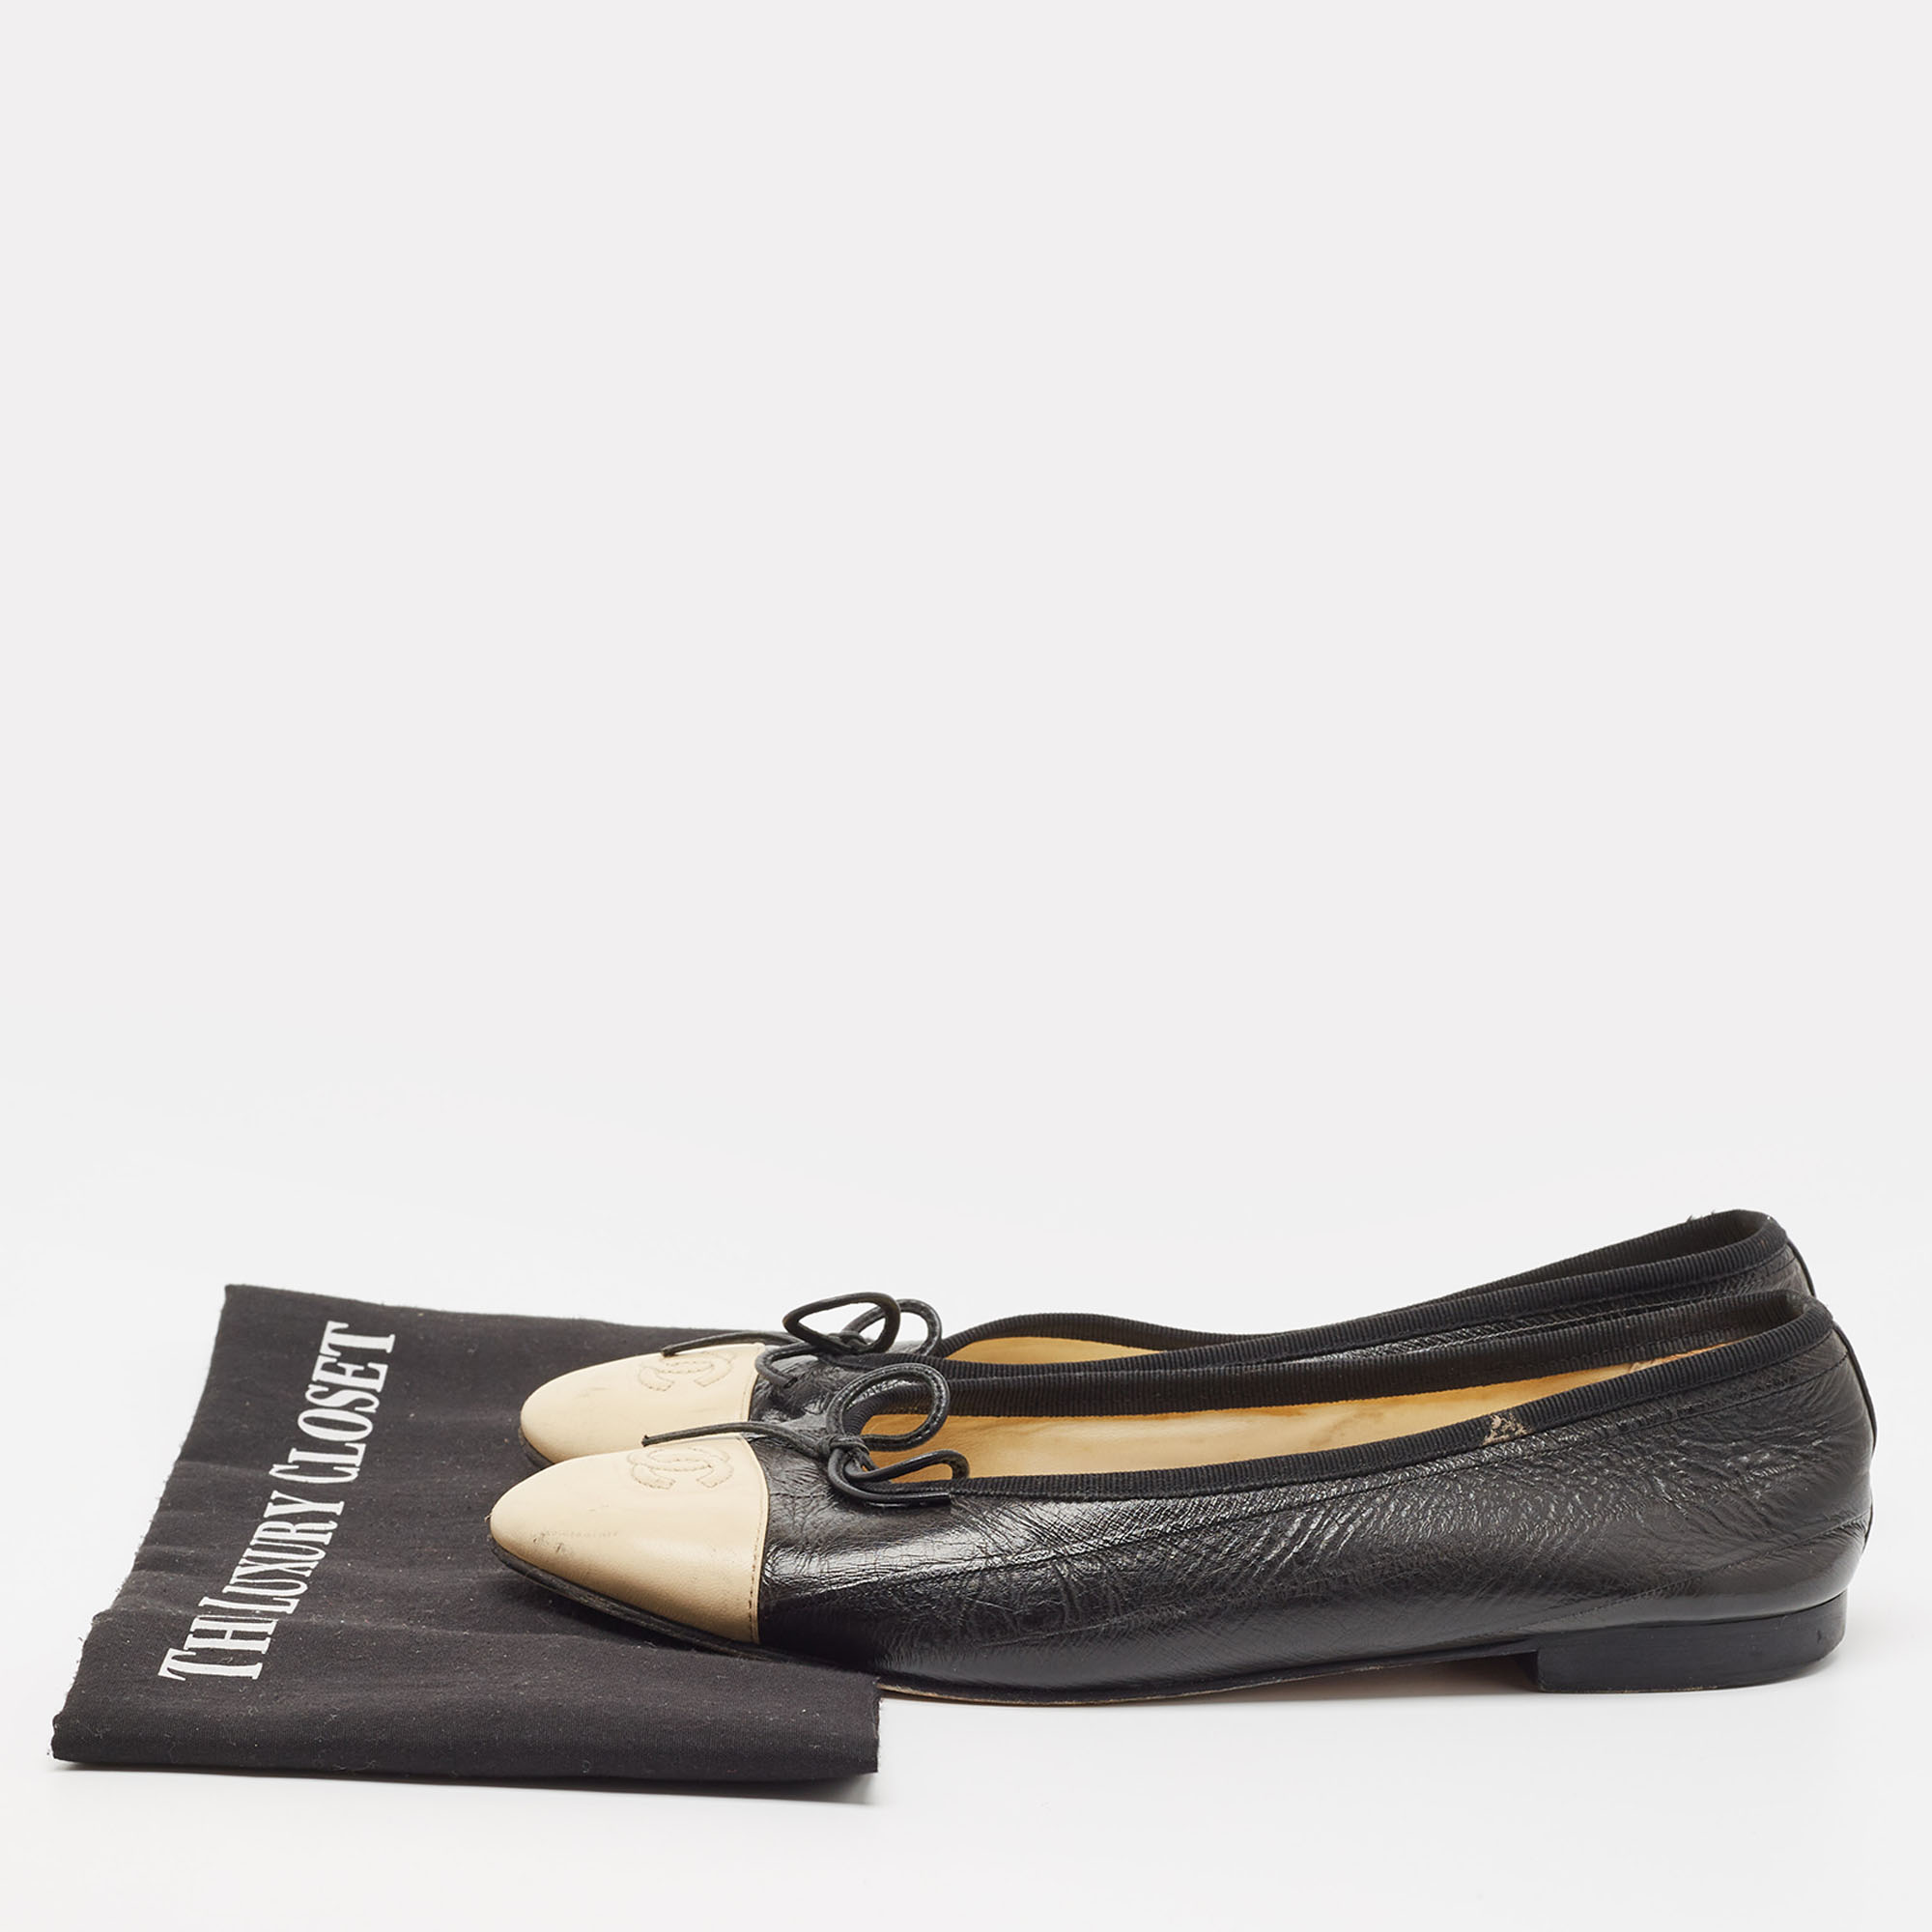 Chanel Black/Beige Eel Leather CC Bow Cap Toe Ballet Flats Size 40.5